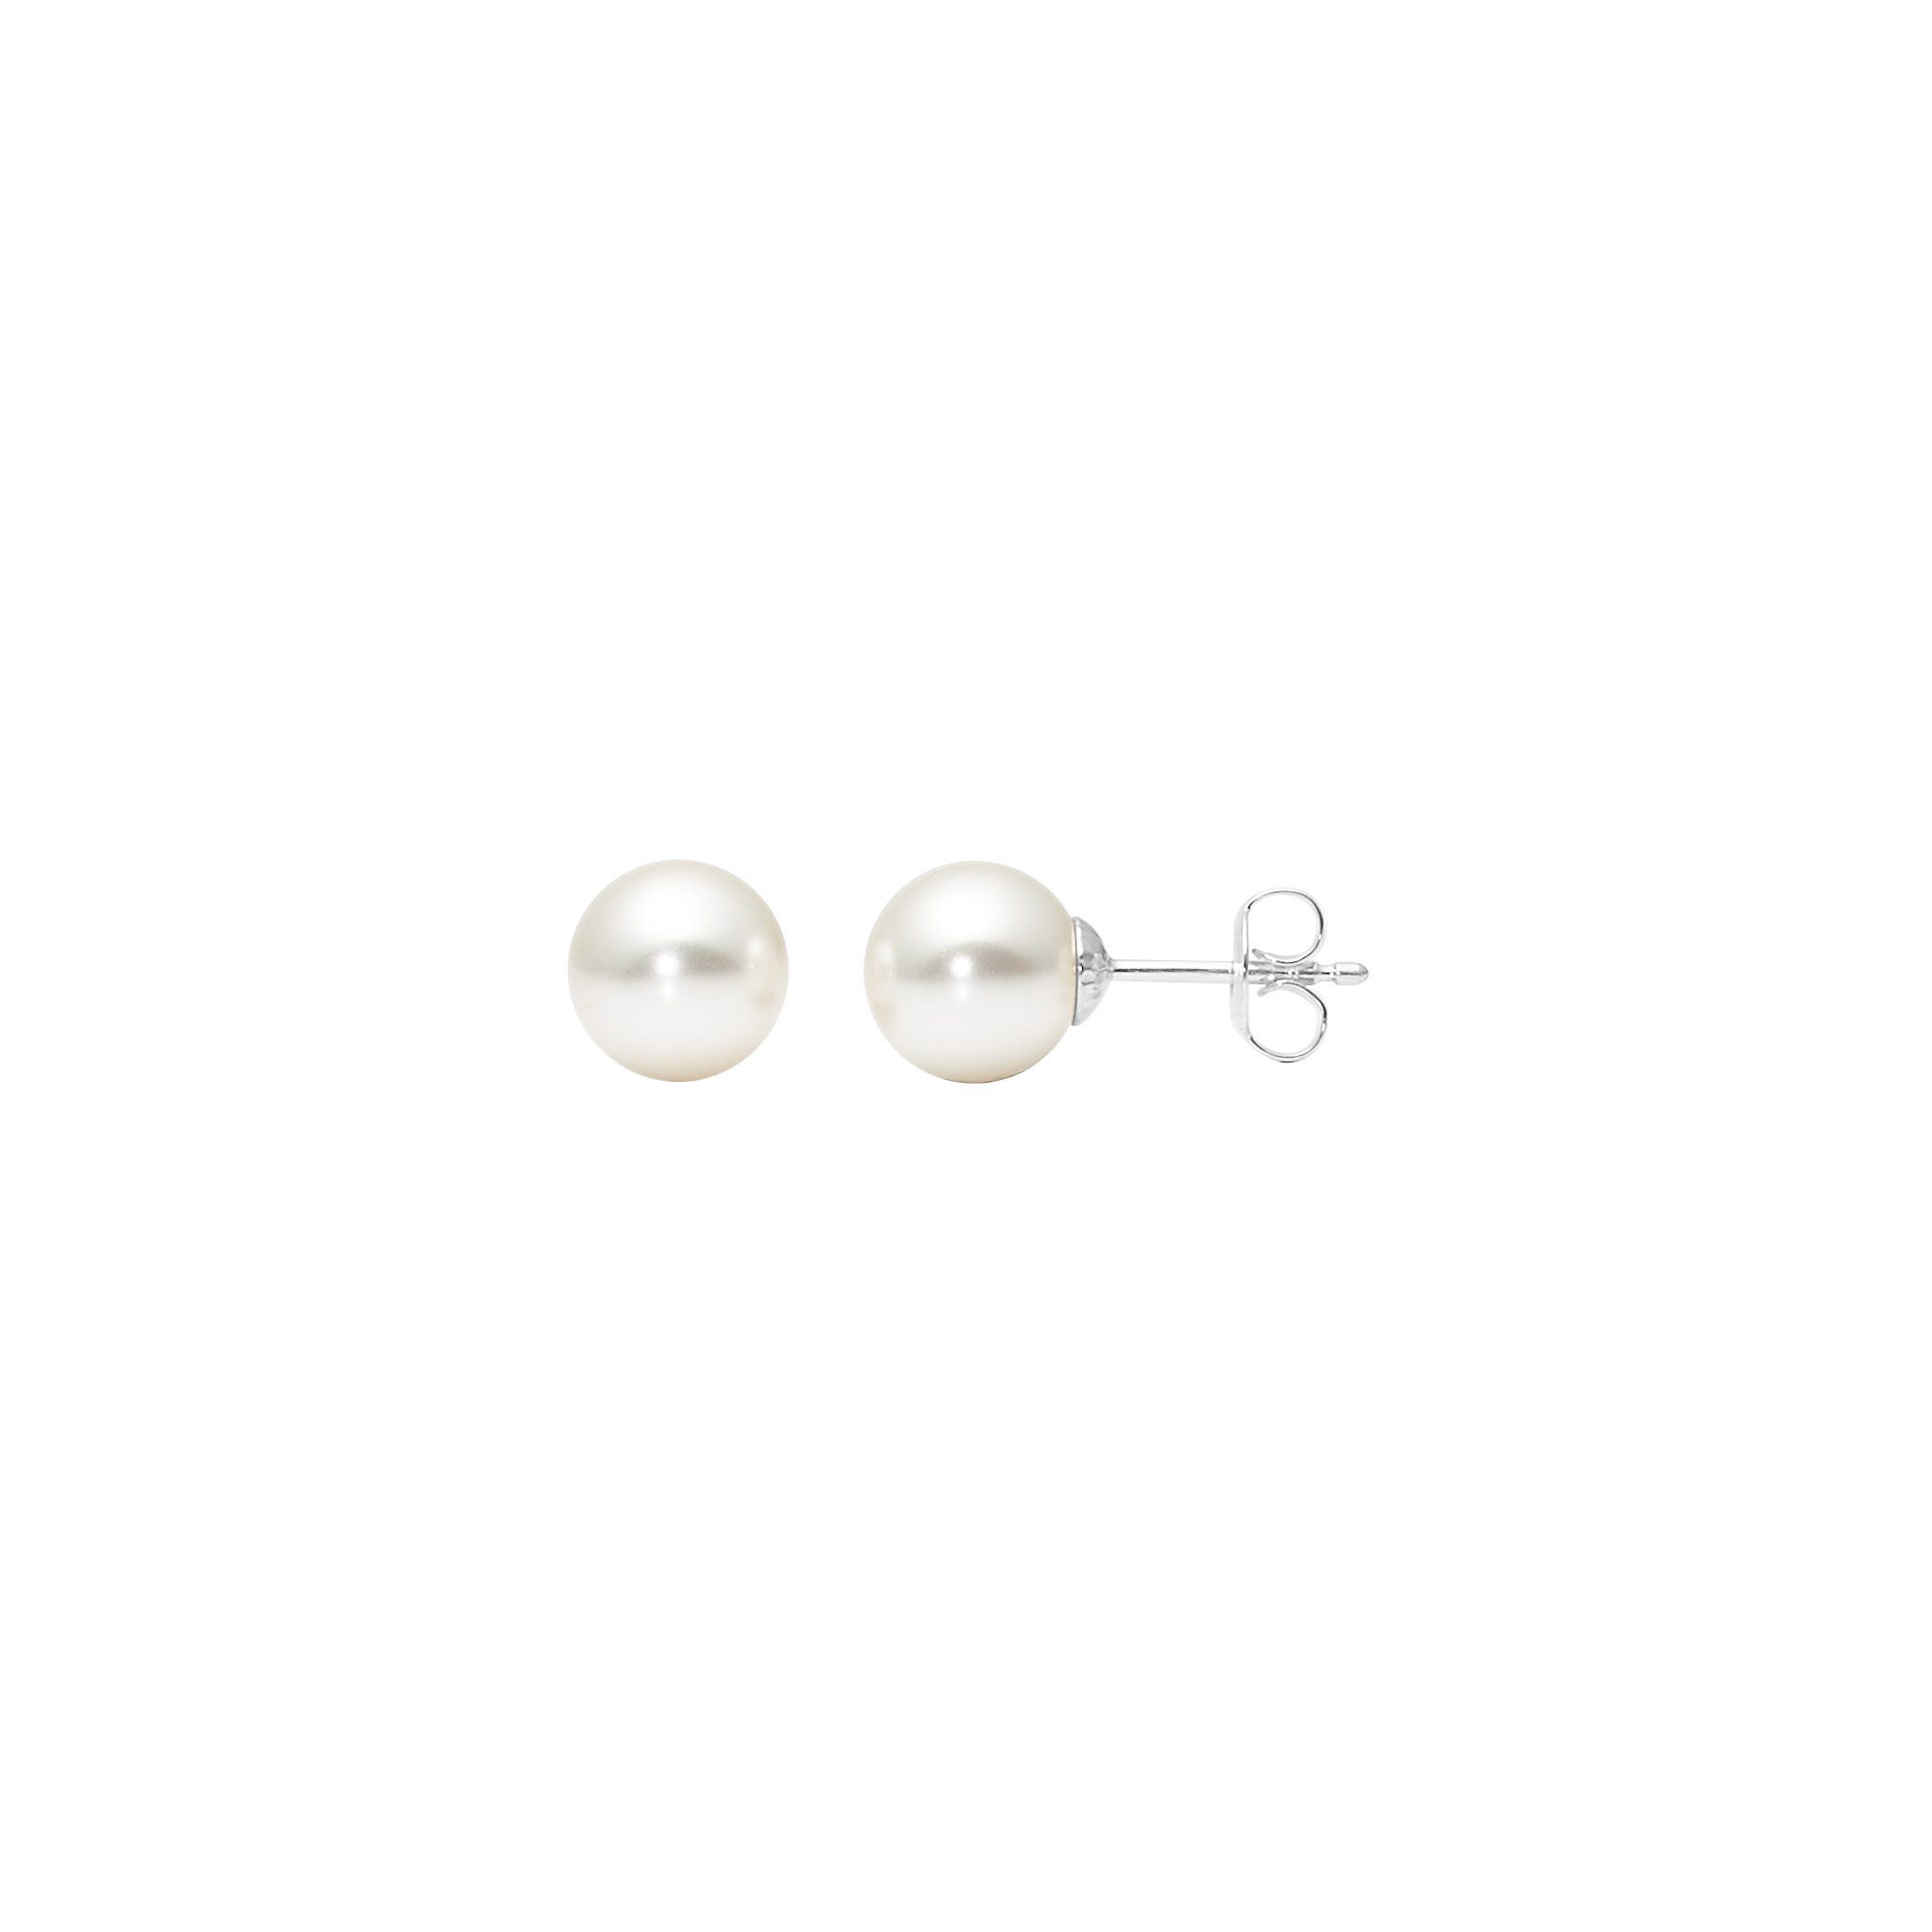 Heideman Paar Ohrstecker Fischhaken VIII (Ohrringe, inkl. Geschenkverpackung), Perlenohrringe mit Perle weiß oder farbig weiss